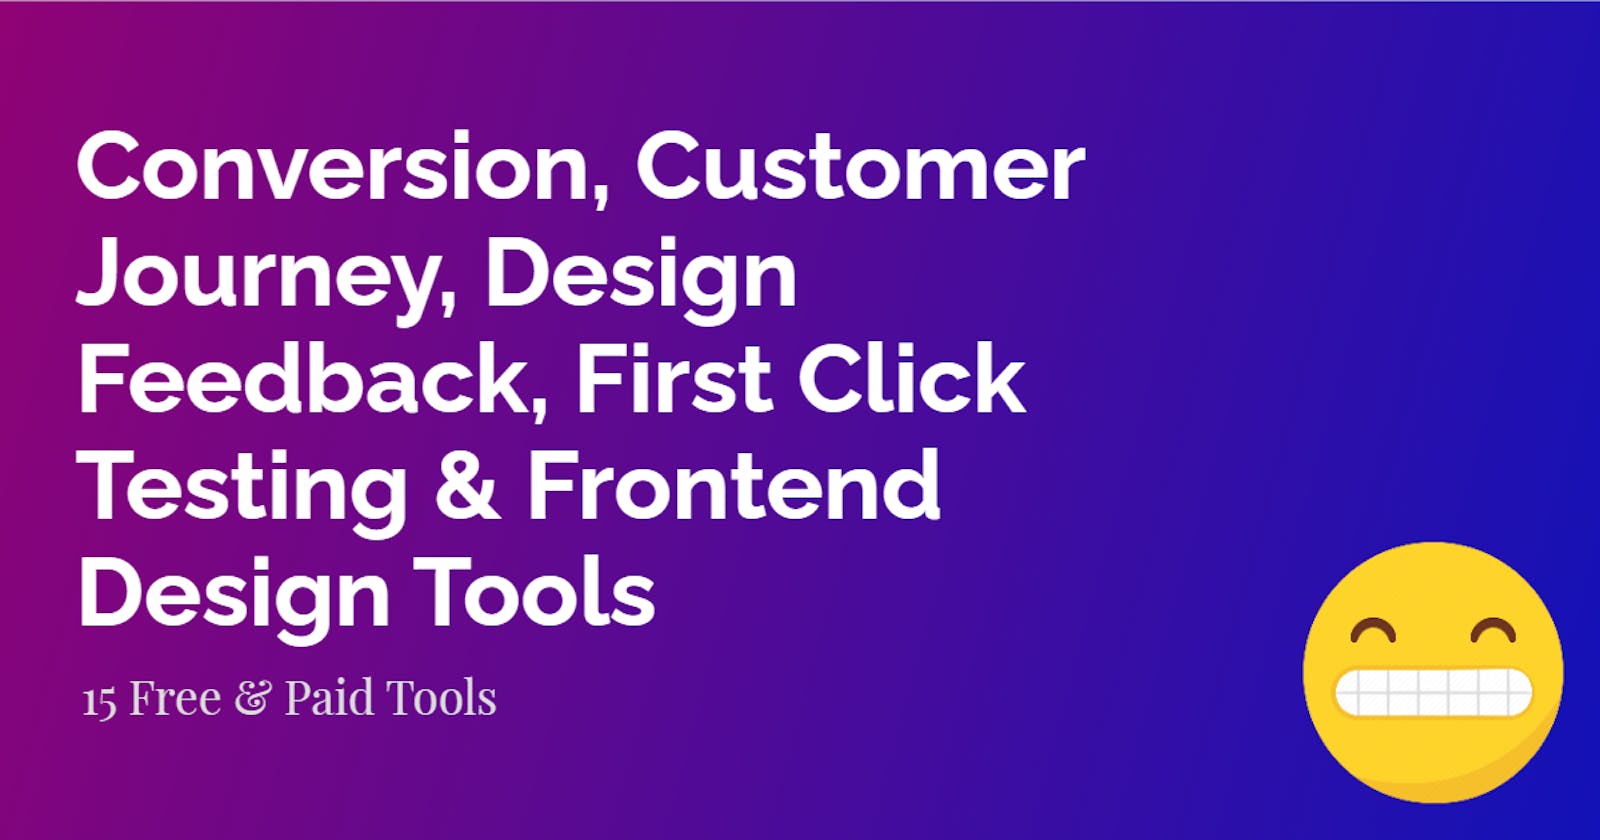 Conversion, Customer Journey, Design Feedback, 1st Click Testing, Frontend Design Tools | UX